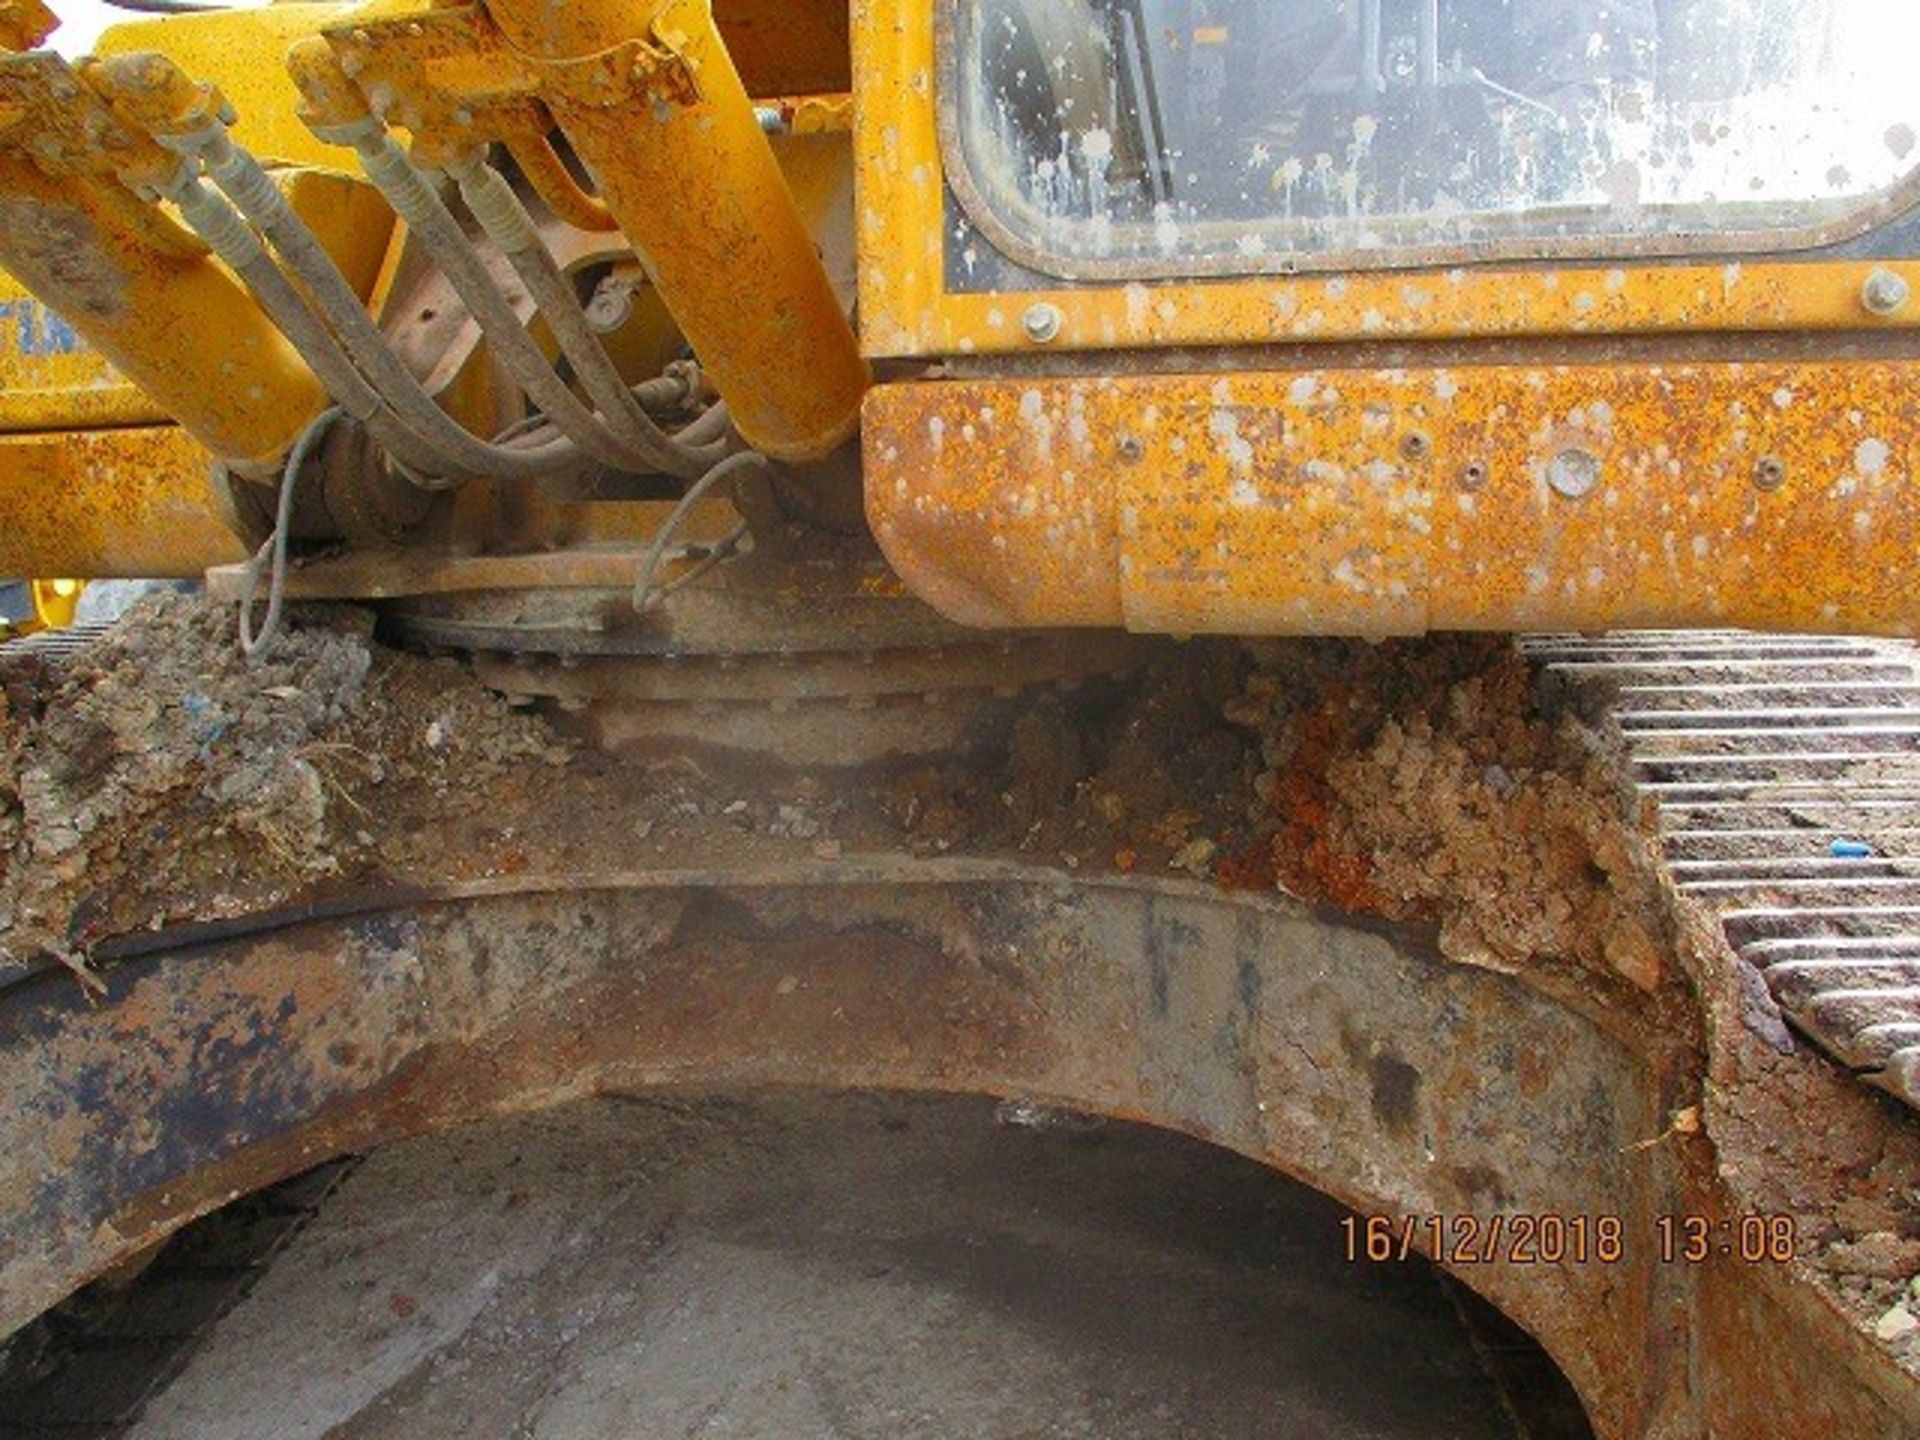 Komatsu PC300-8 Tracked Excavator - Image 8 of 31